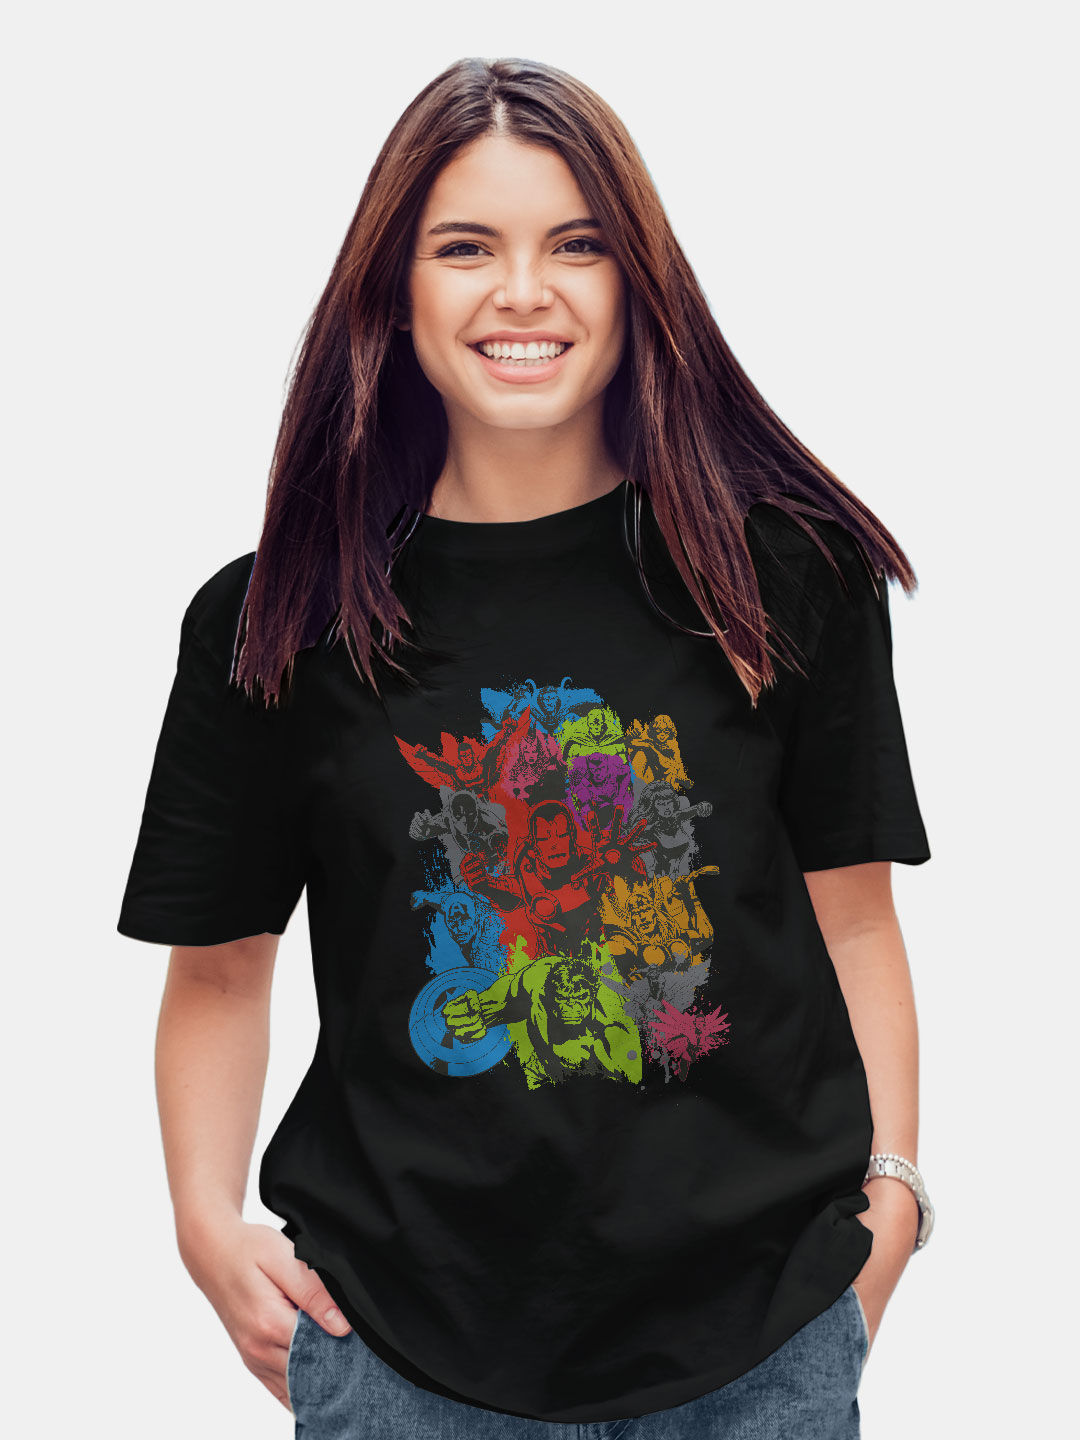 Artistic Marvel - Womens Oversized T-Shirt Size : S Color - Black